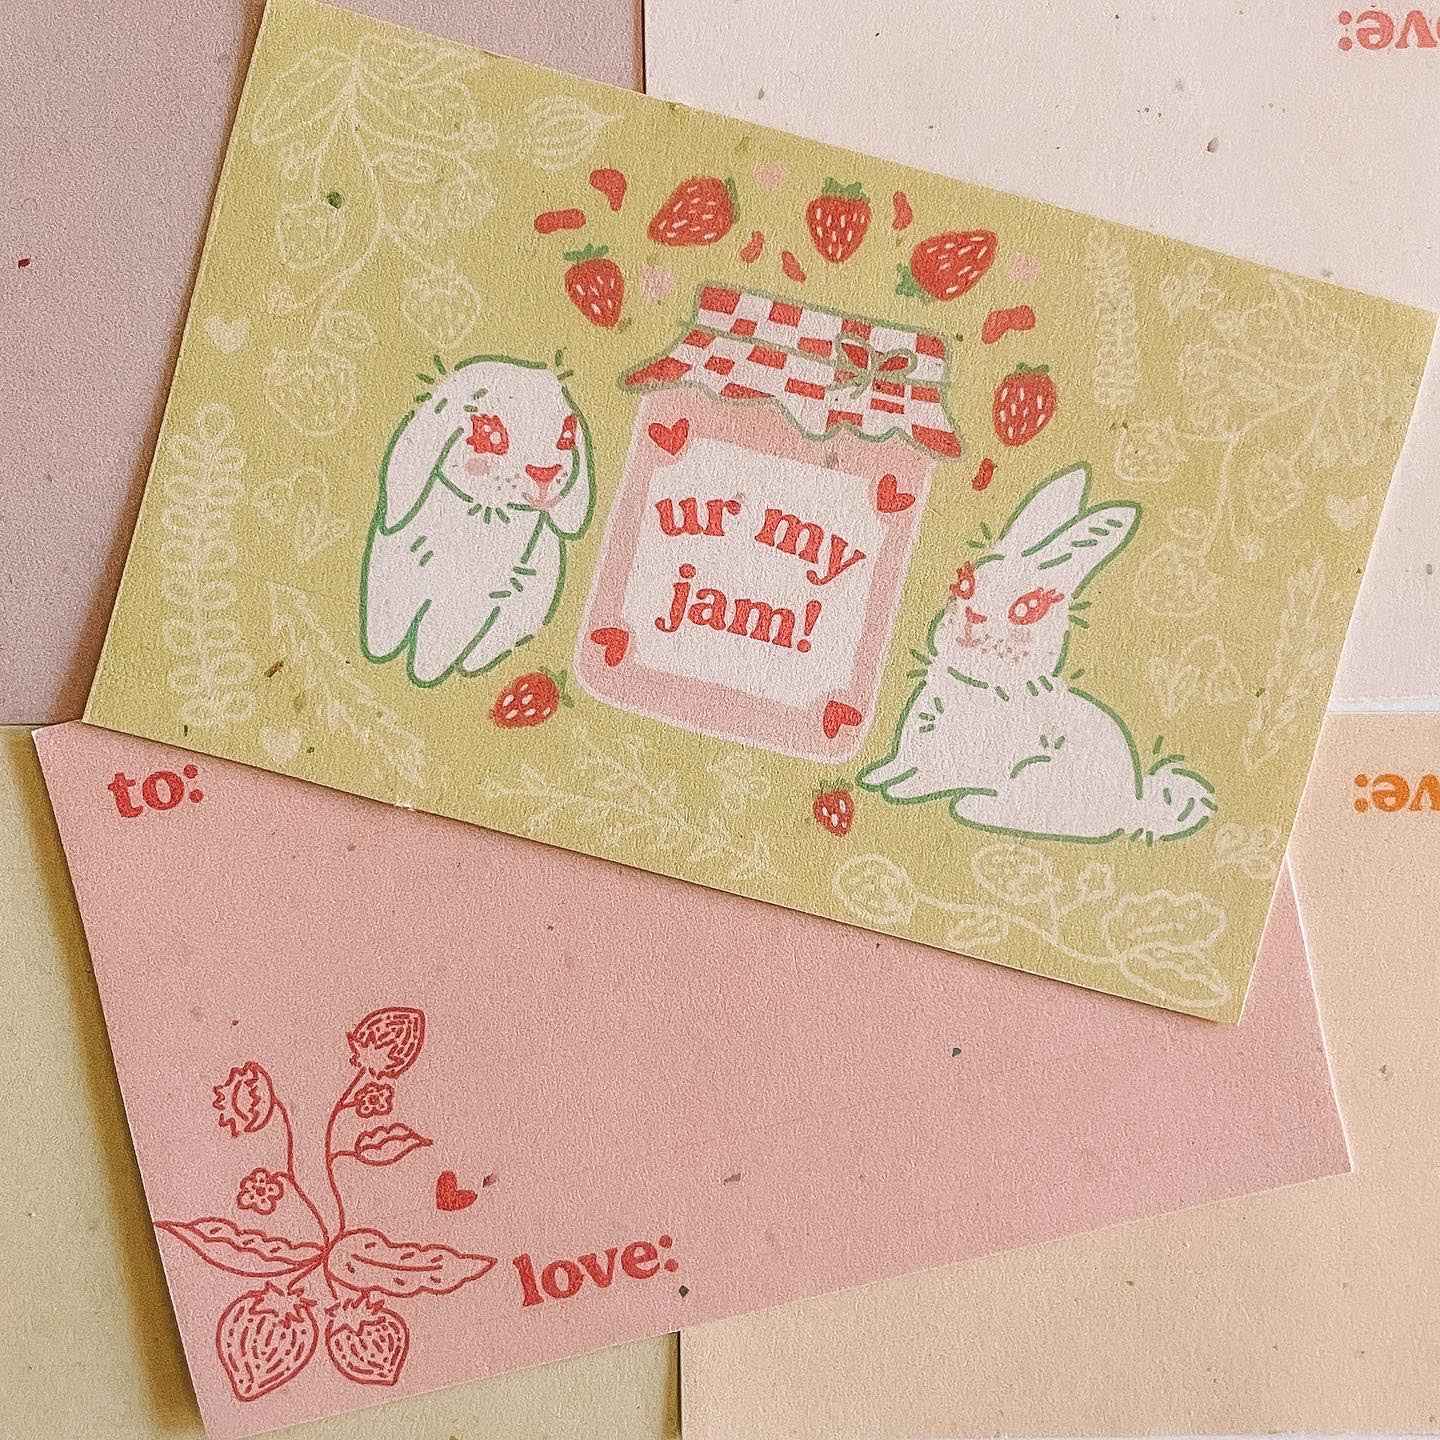 two bunnies and jam jar valentine card